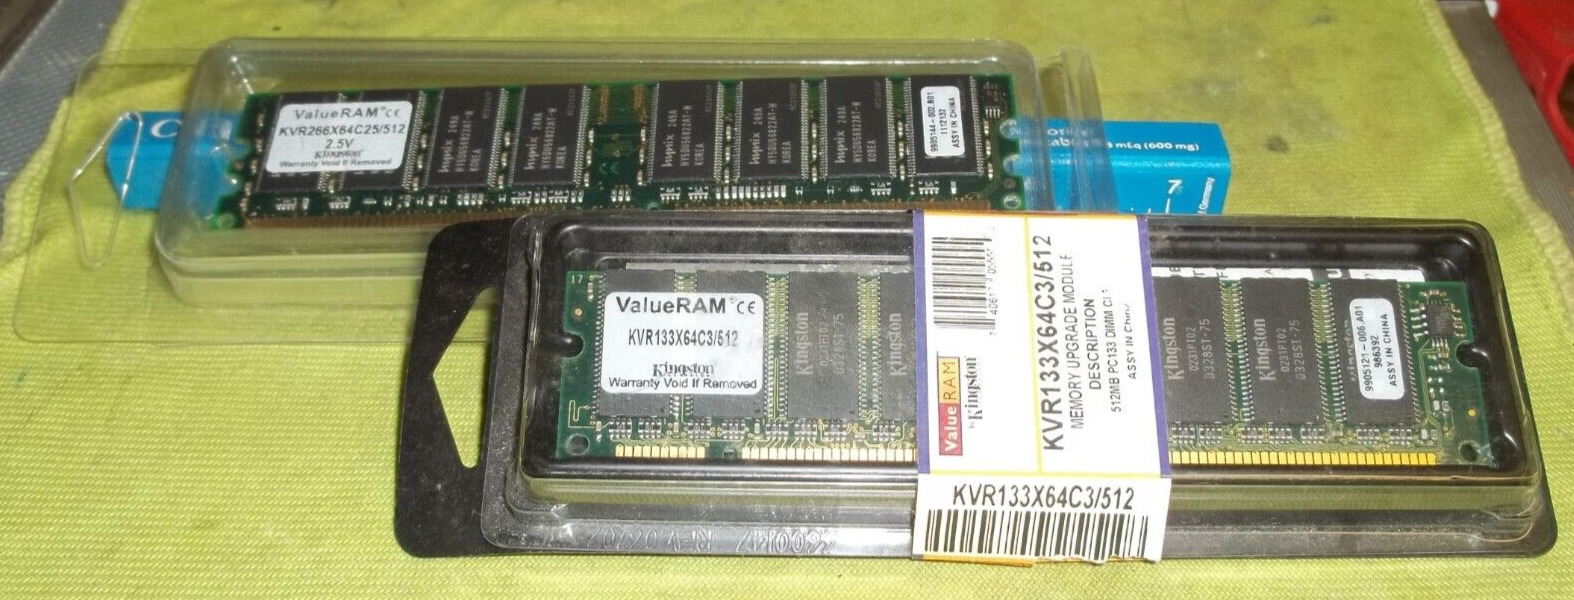 Kingston ValueRAM 512 MB DIMM 133 MHz SDRAM Memory (KVR133X64C3/512)